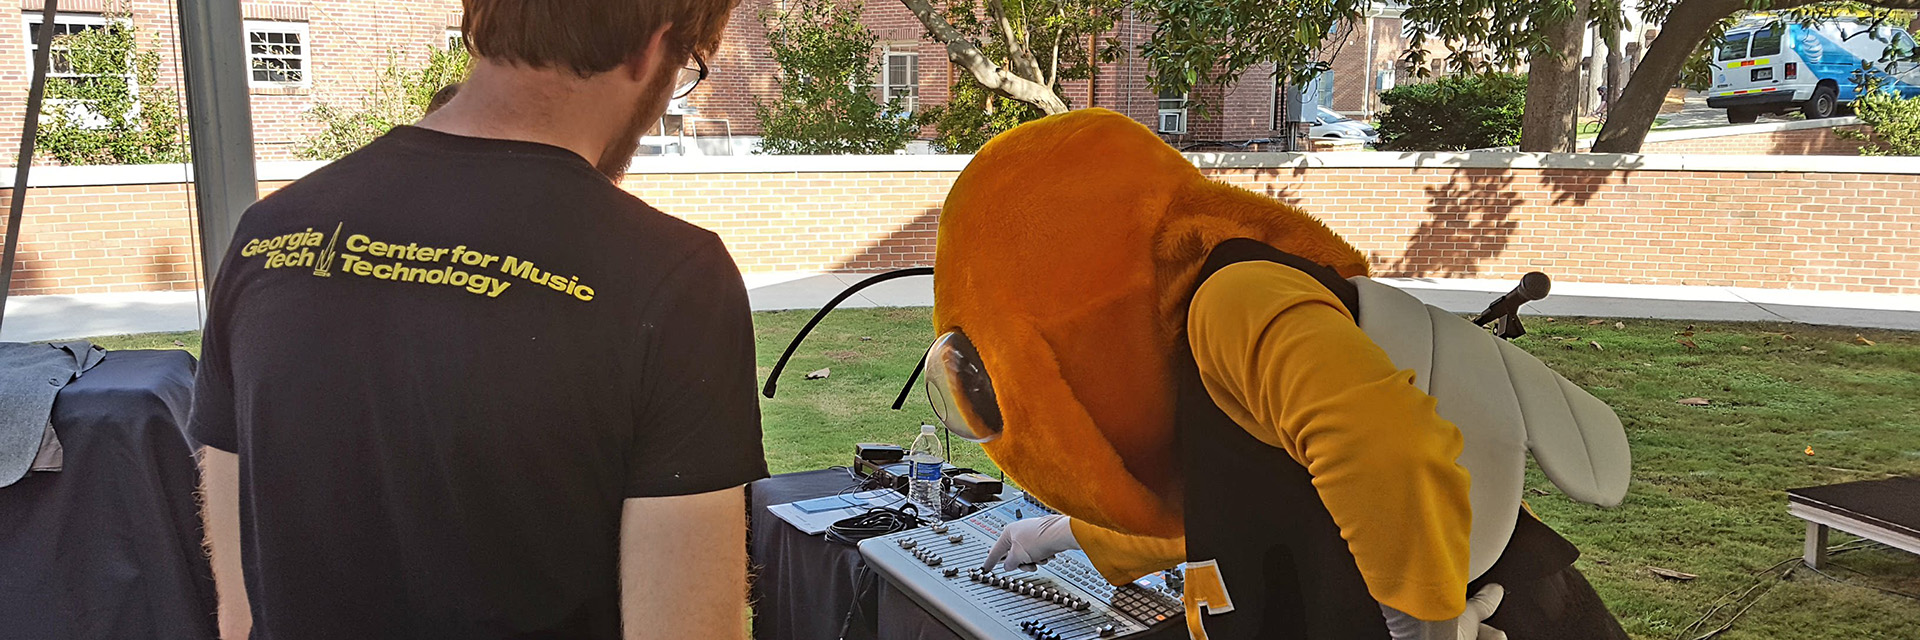 Georgia Tech mascot Buzz uses music technology.